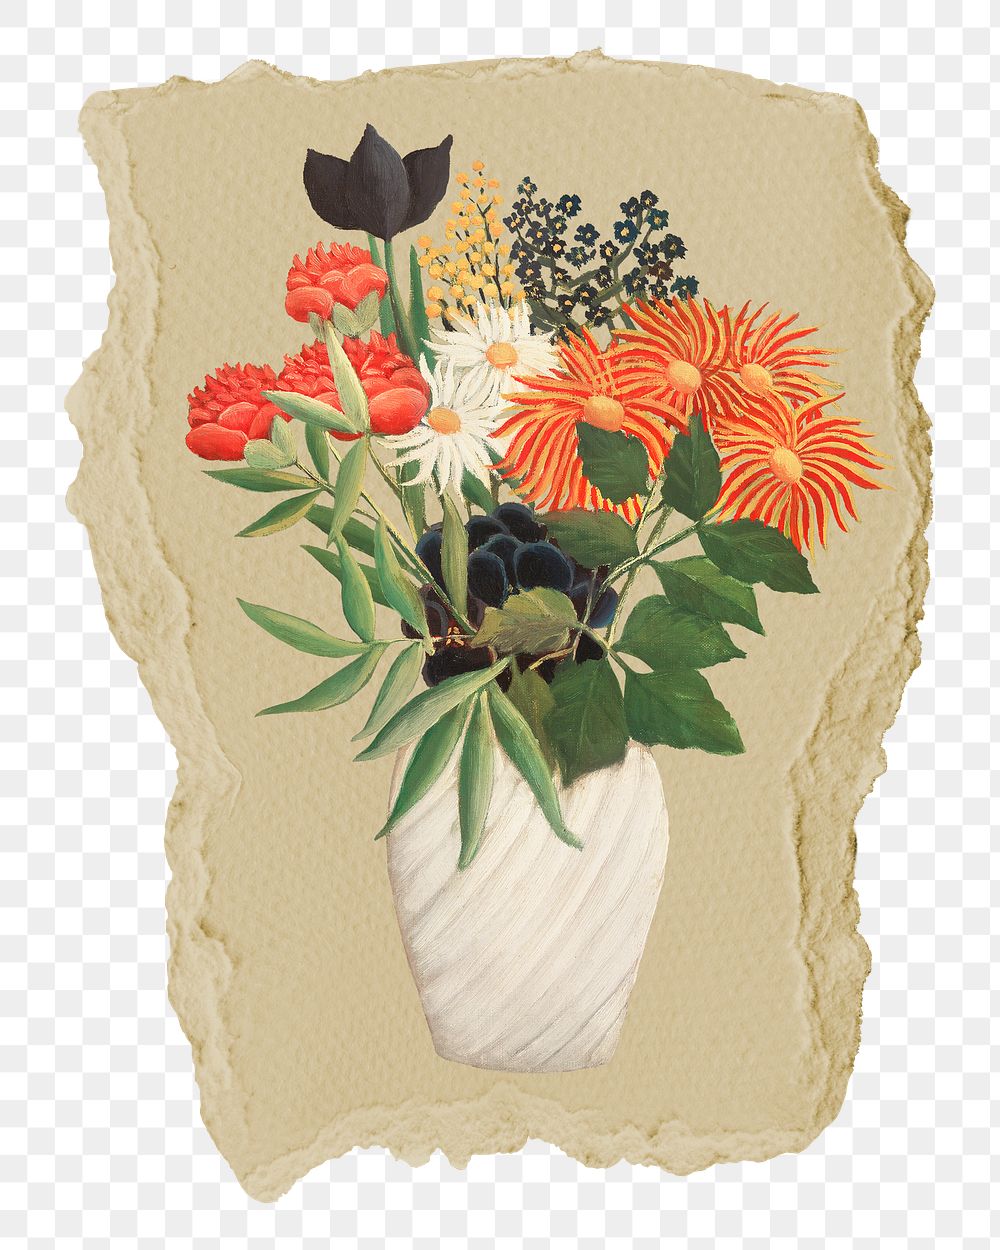 Png flowers in a vase sticker, vintage illustration on ripped paper, transparent background